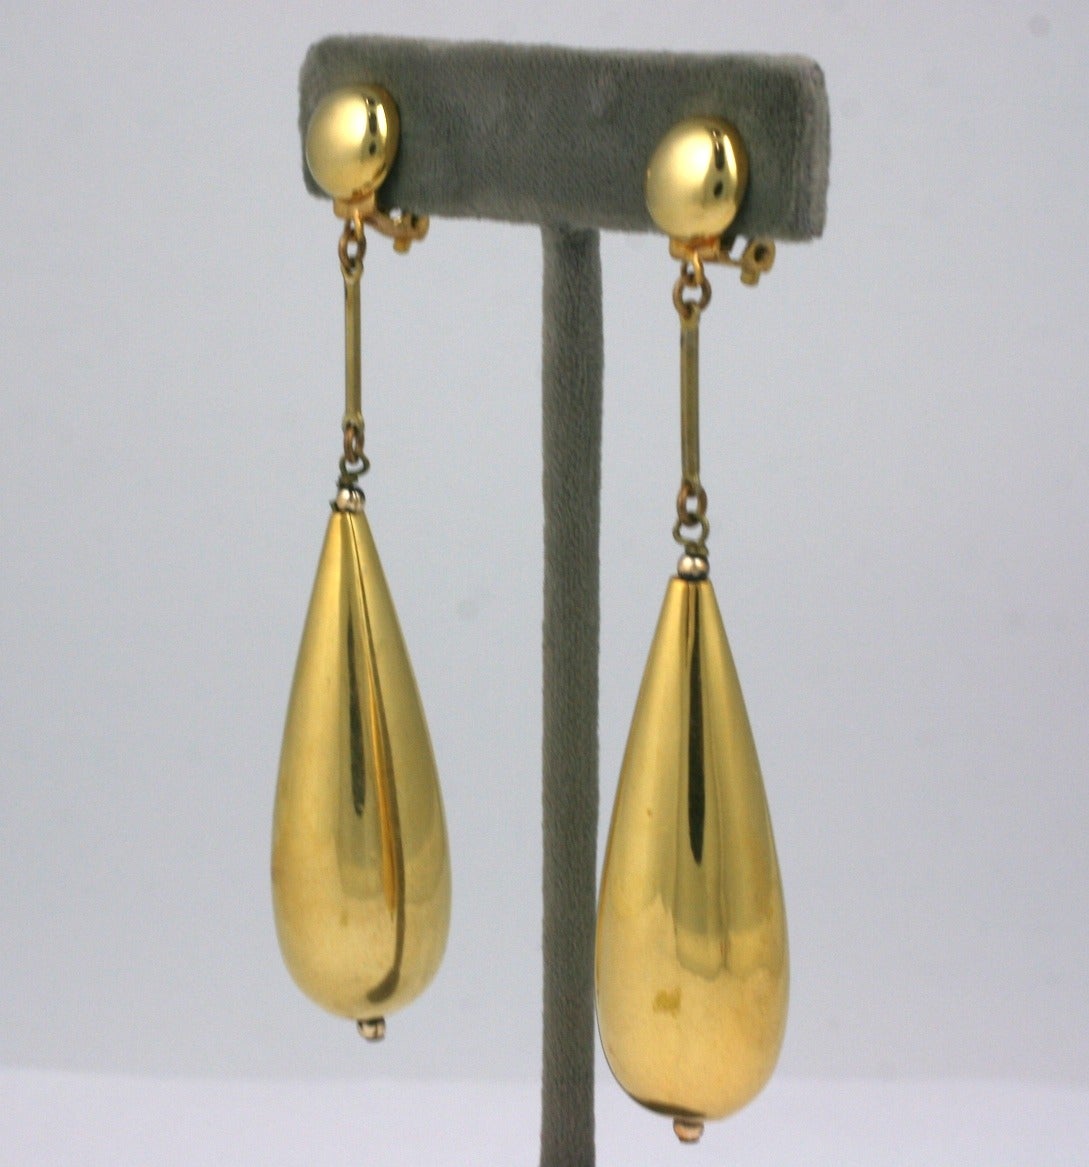 Elegant Lanvin Gold Metal Drop Earrings from the 1970's. Clip back fittings.
3.25